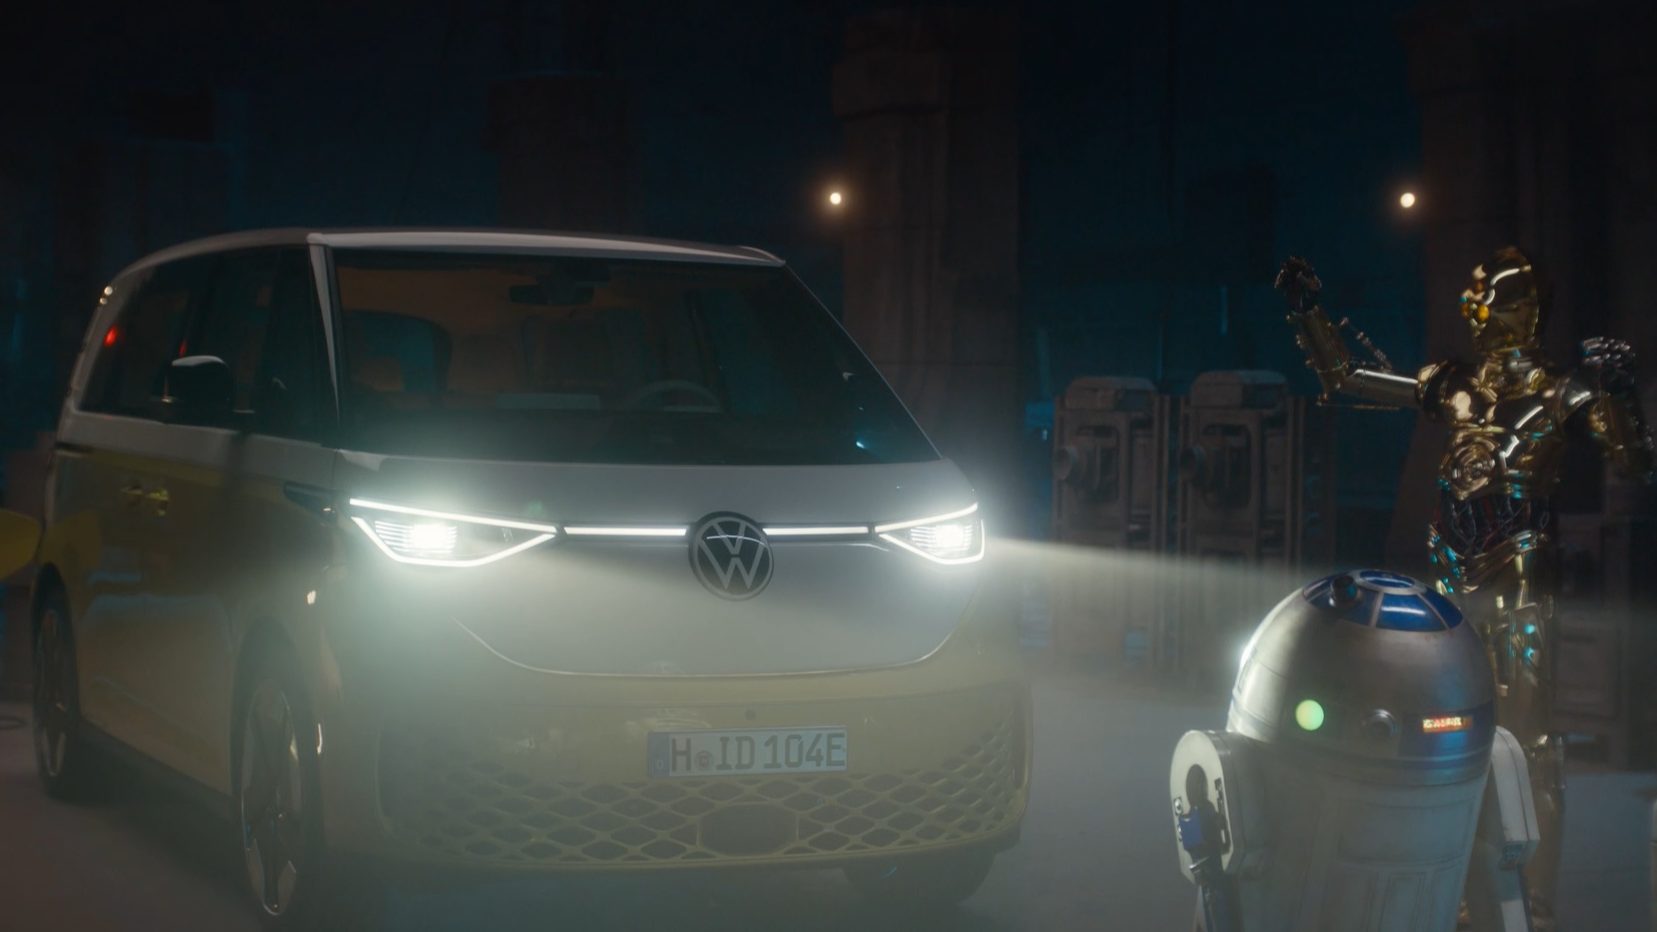 Nova Kombi elétrica da Volkswagen fará parte da nova série da saga Star Wars